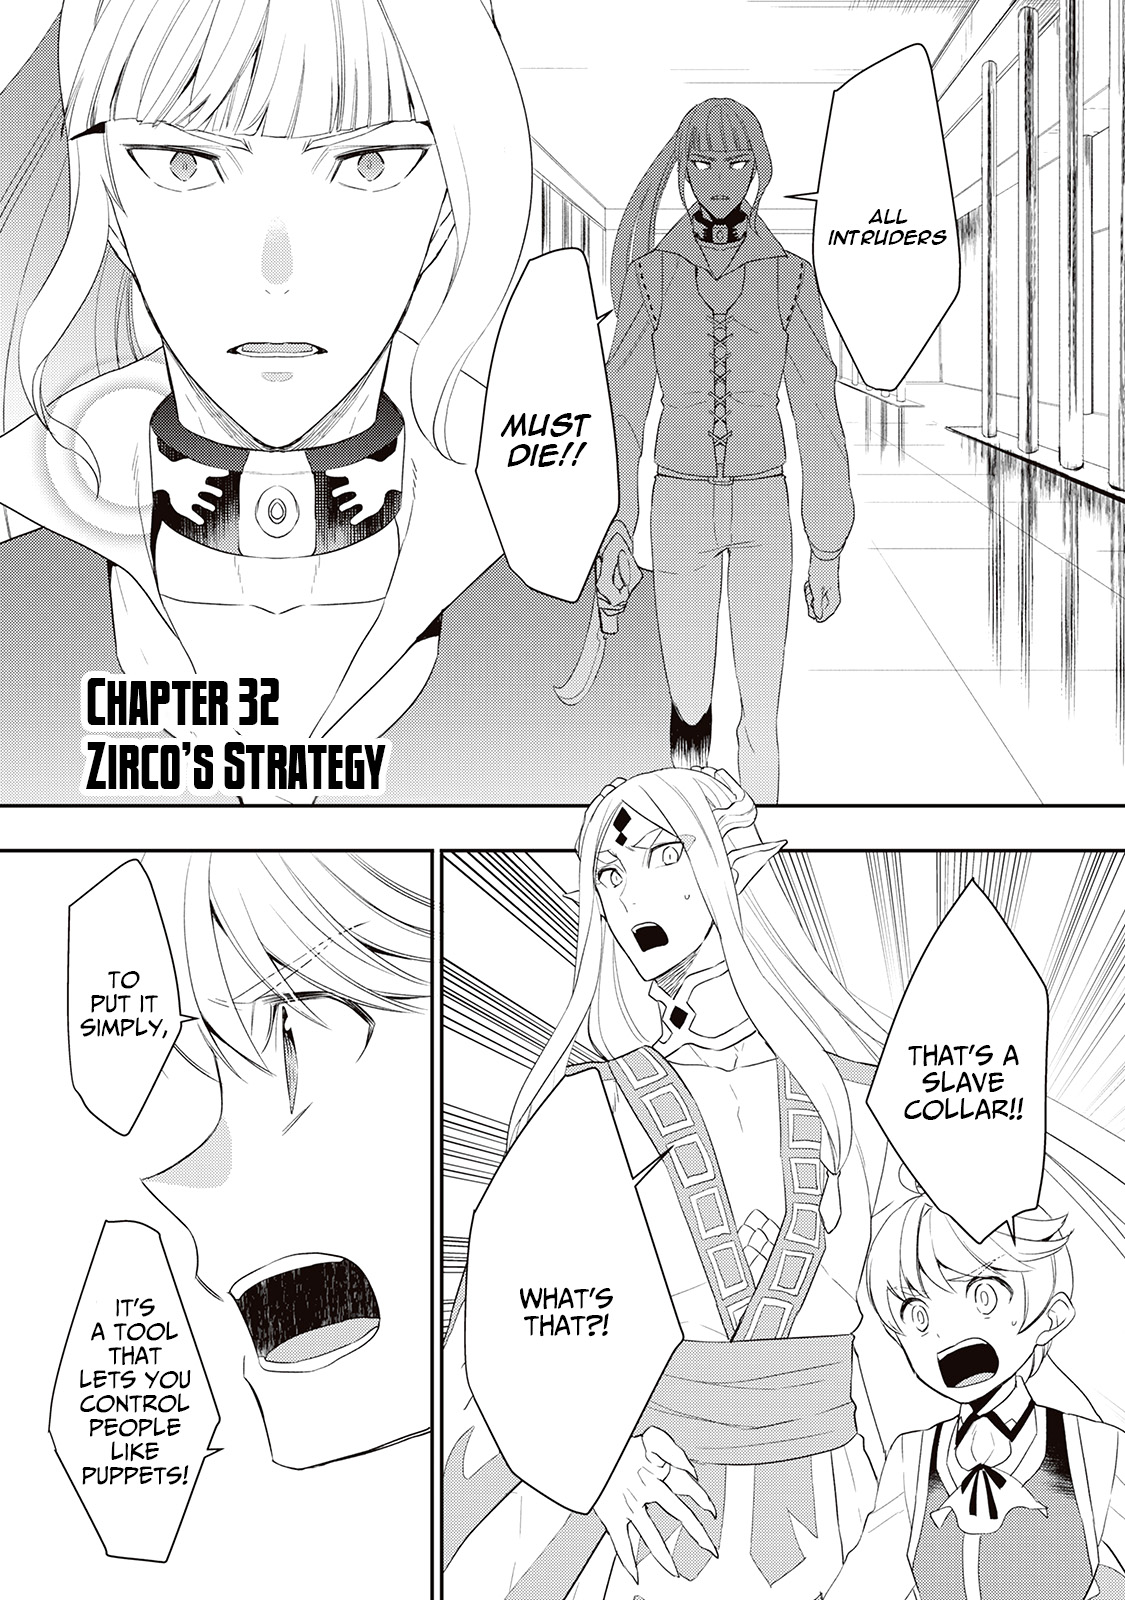 Tenseishichatta Yo (Iya, Gomen) Vol.4 Chapter 32: Zirco's Strategy - Picture 2